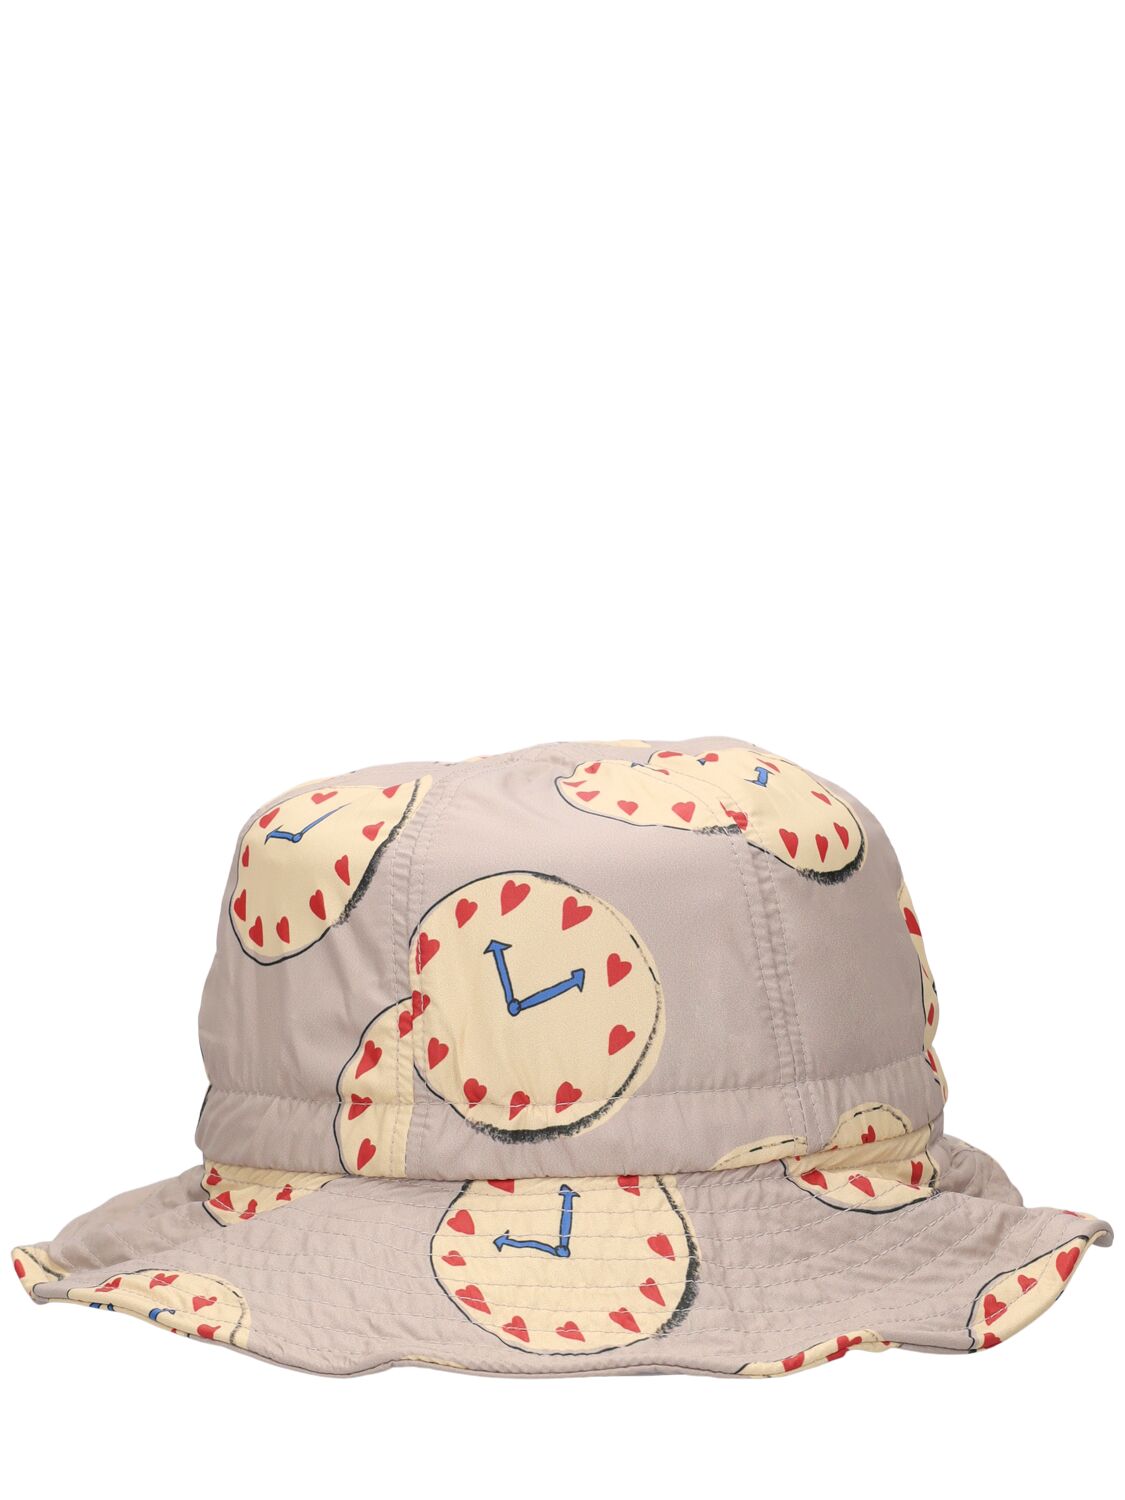 Image of Clock Printed Cotton Bucket Hat